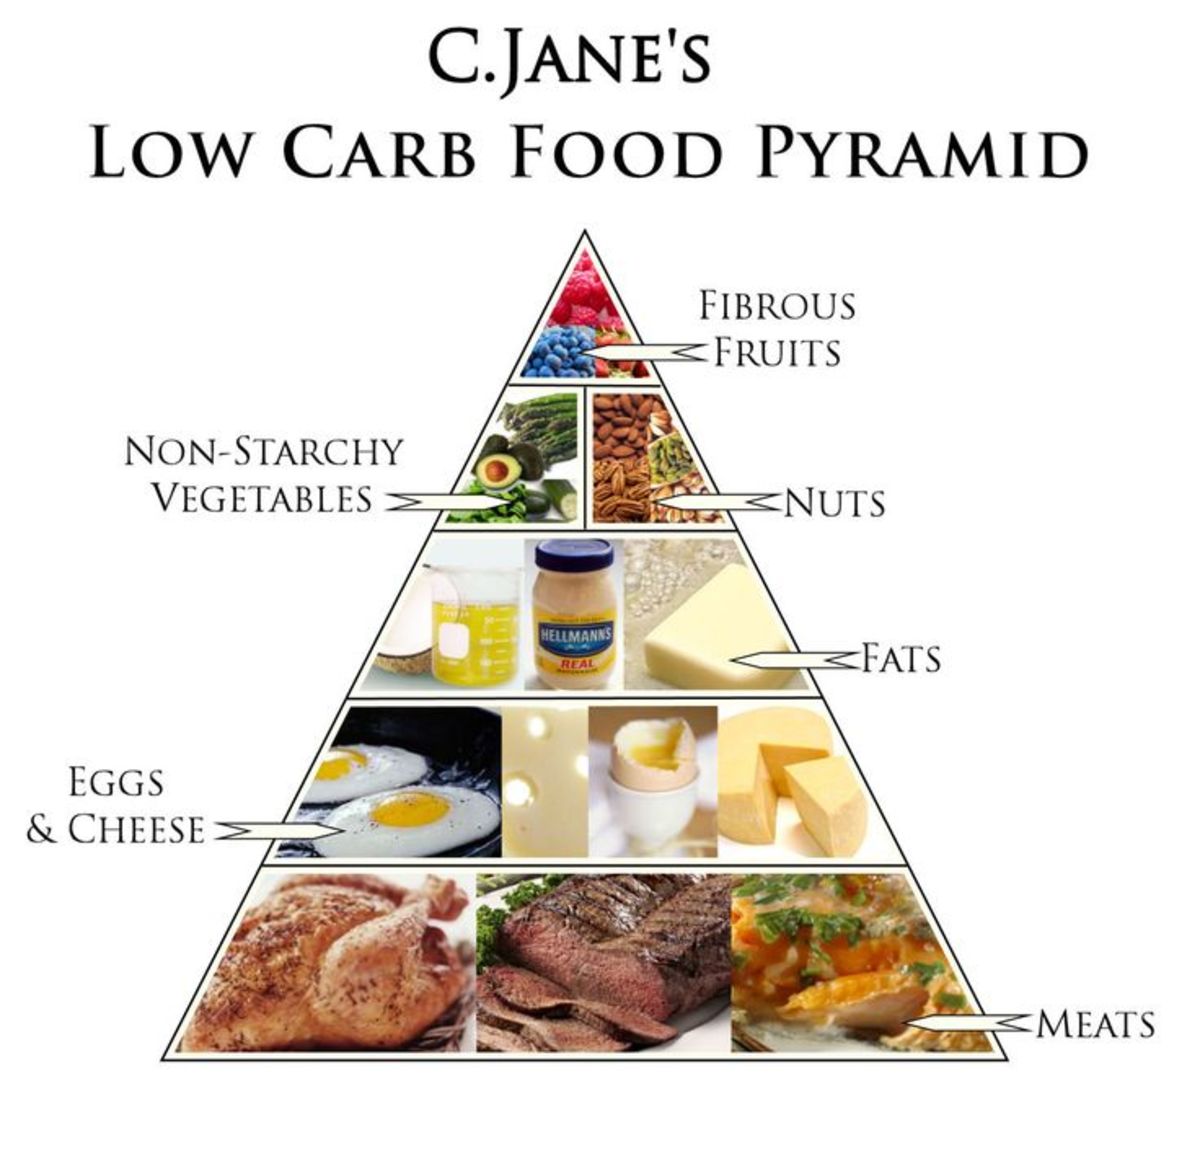 C. Jane's Low Carb Food Pyramid